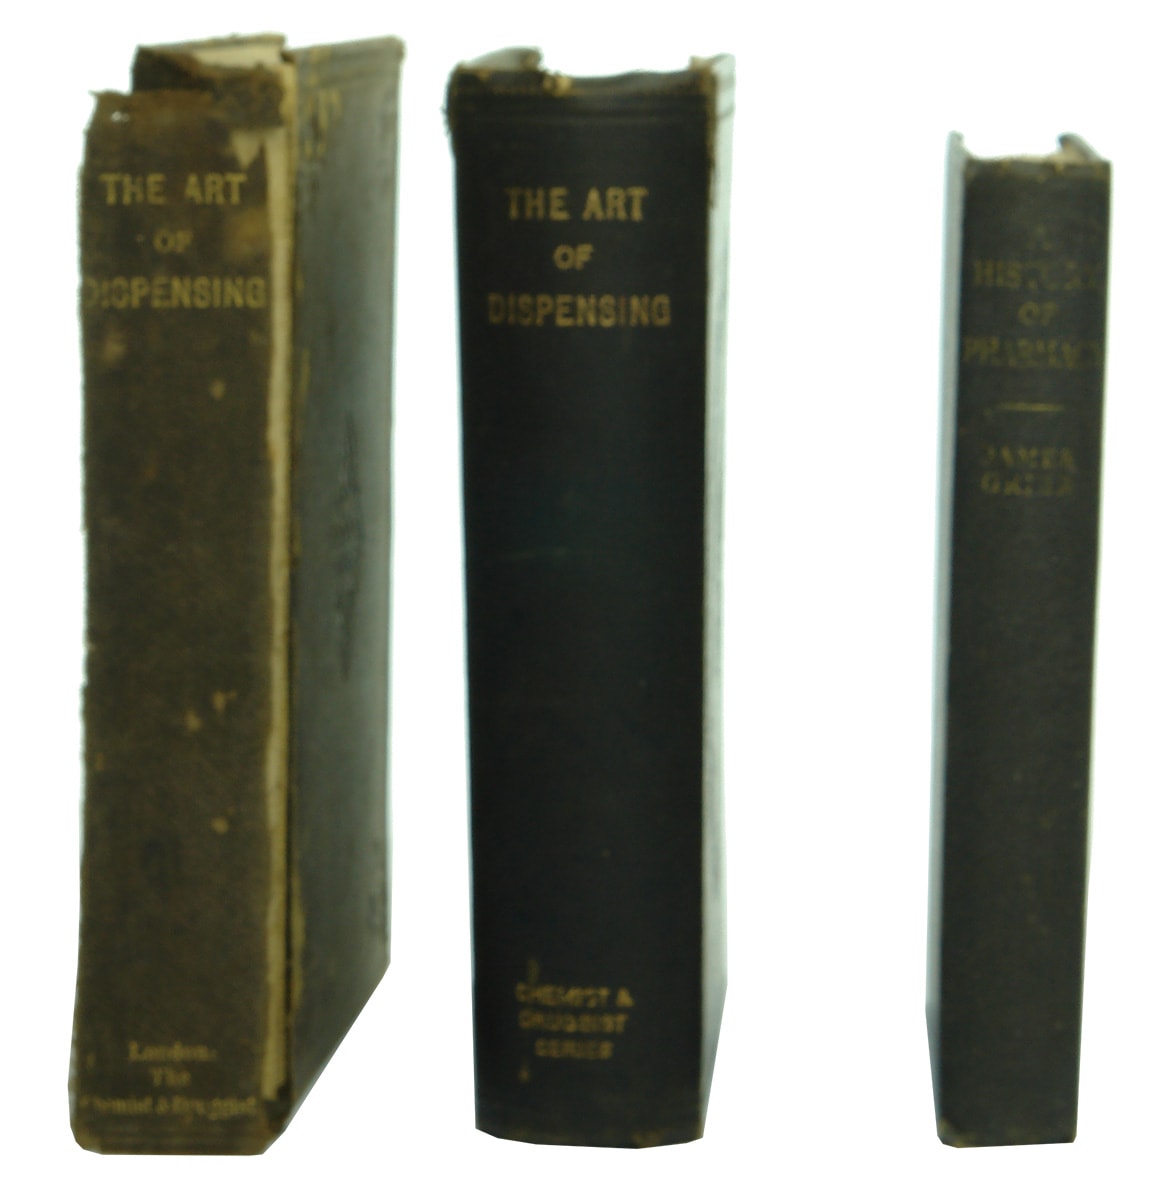 Antique Medical Pharmacy Books